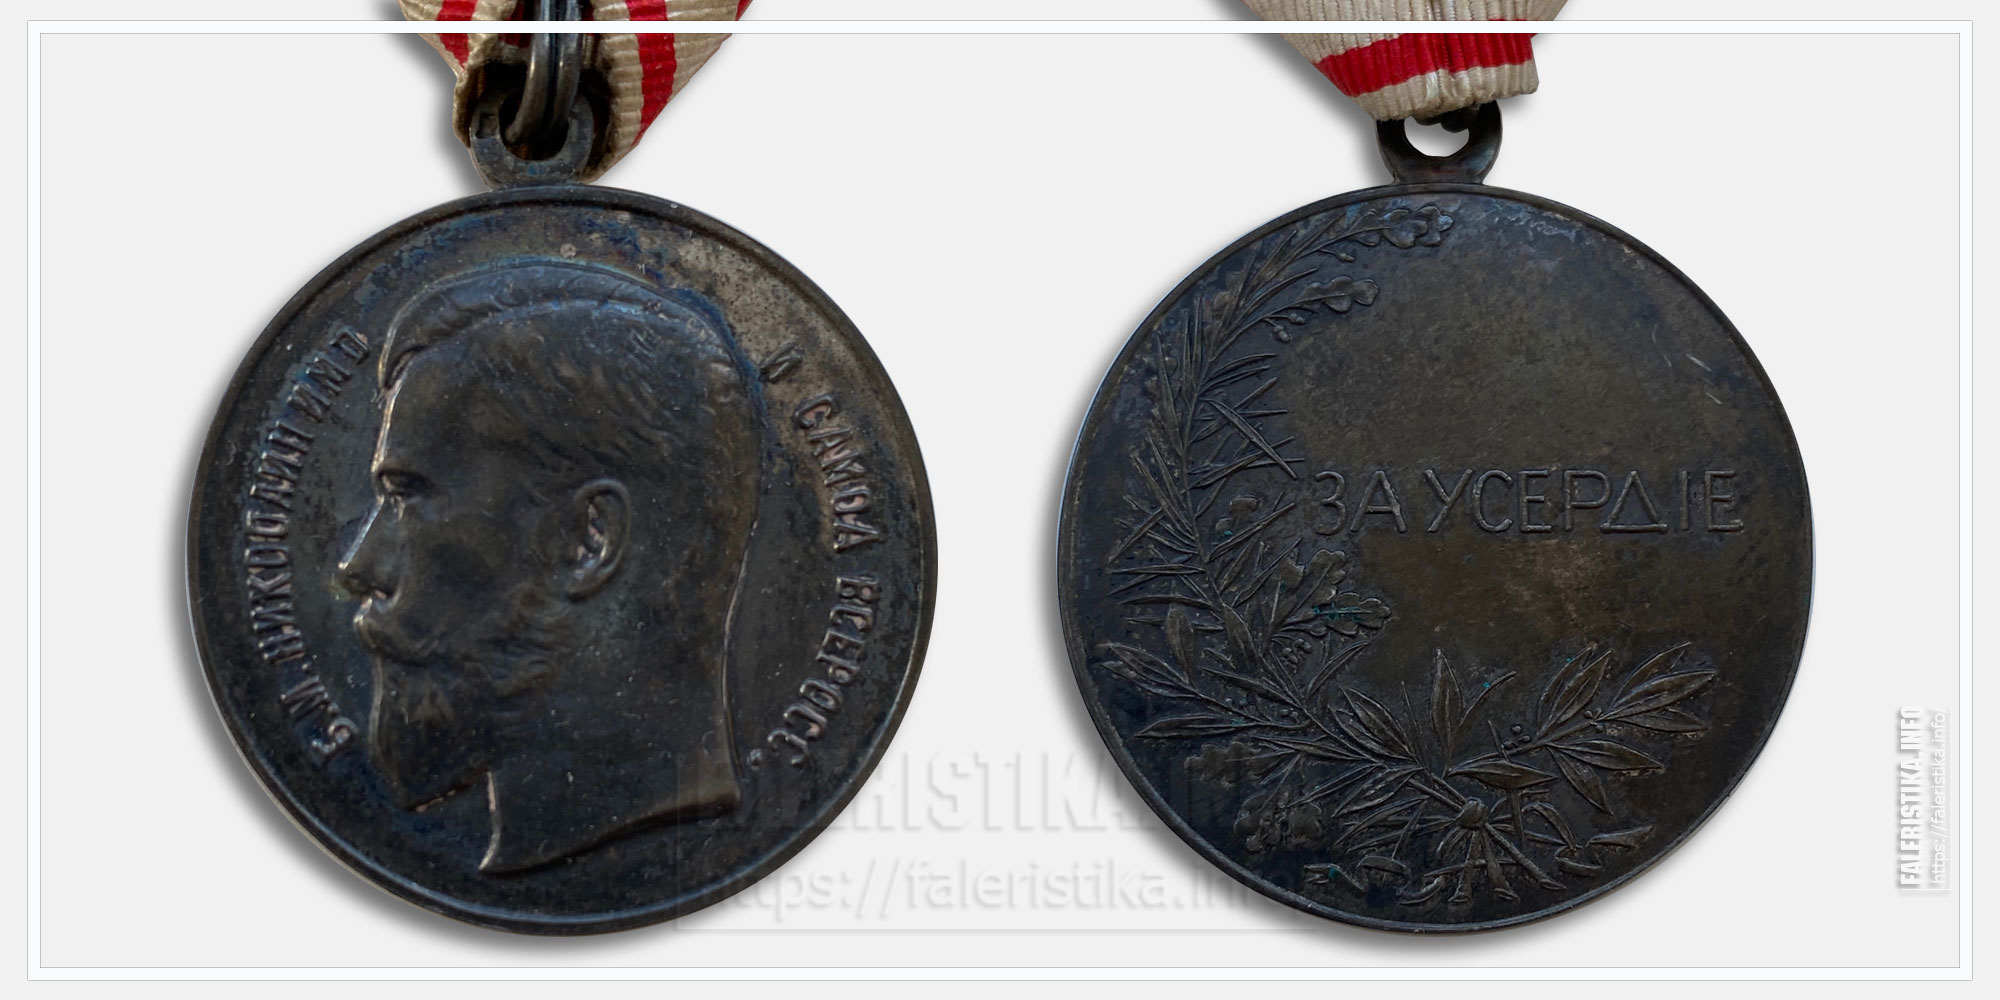 Медаль "За усердие" Николай II Серебро. Изготовлено во Франции